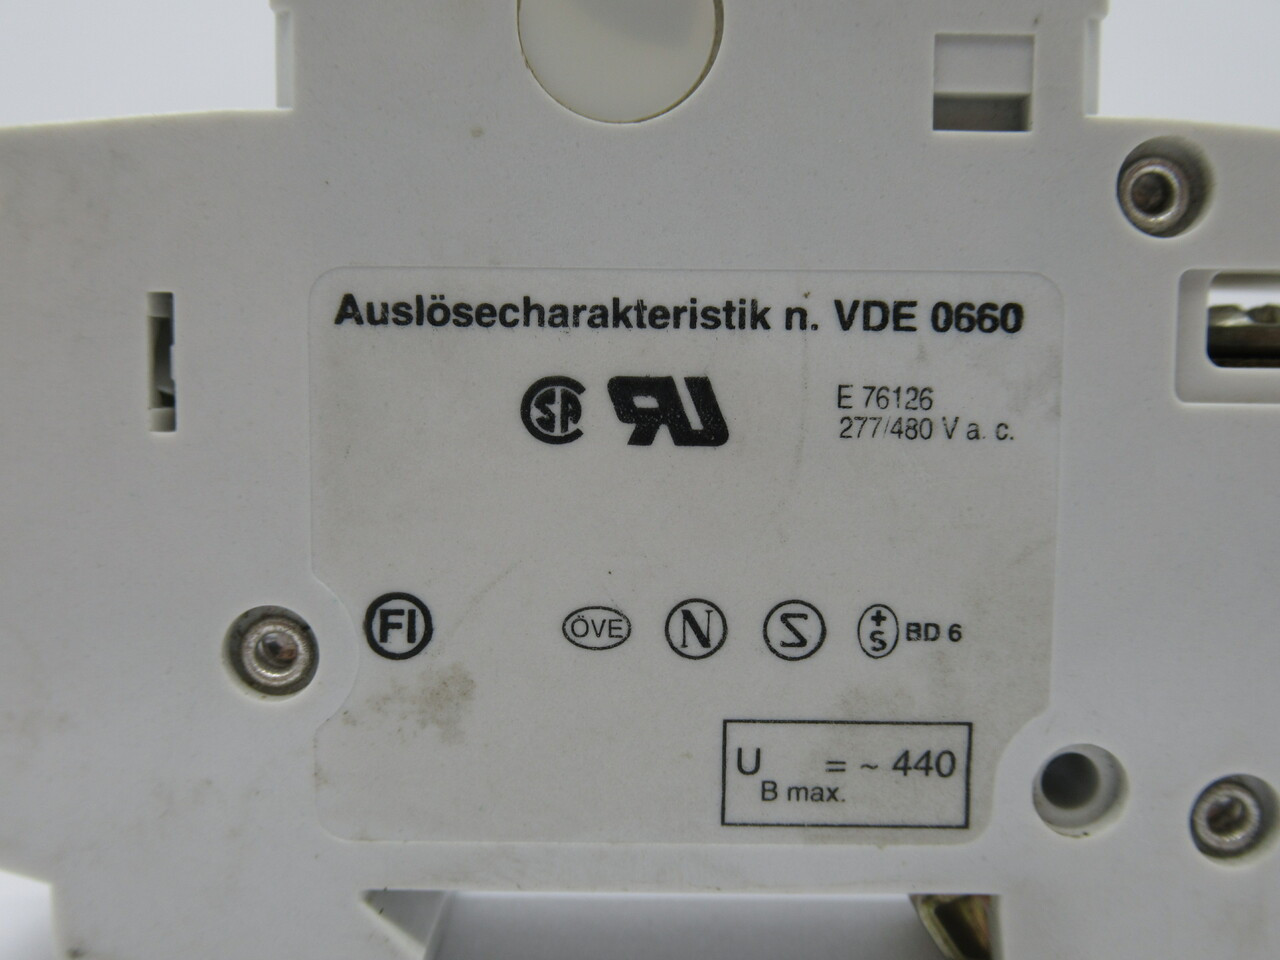 ABB S271-K1.6 Mini Circuit Breaker 1Pole 1.6A 240/415V 227/480VAC UB= 440V USED